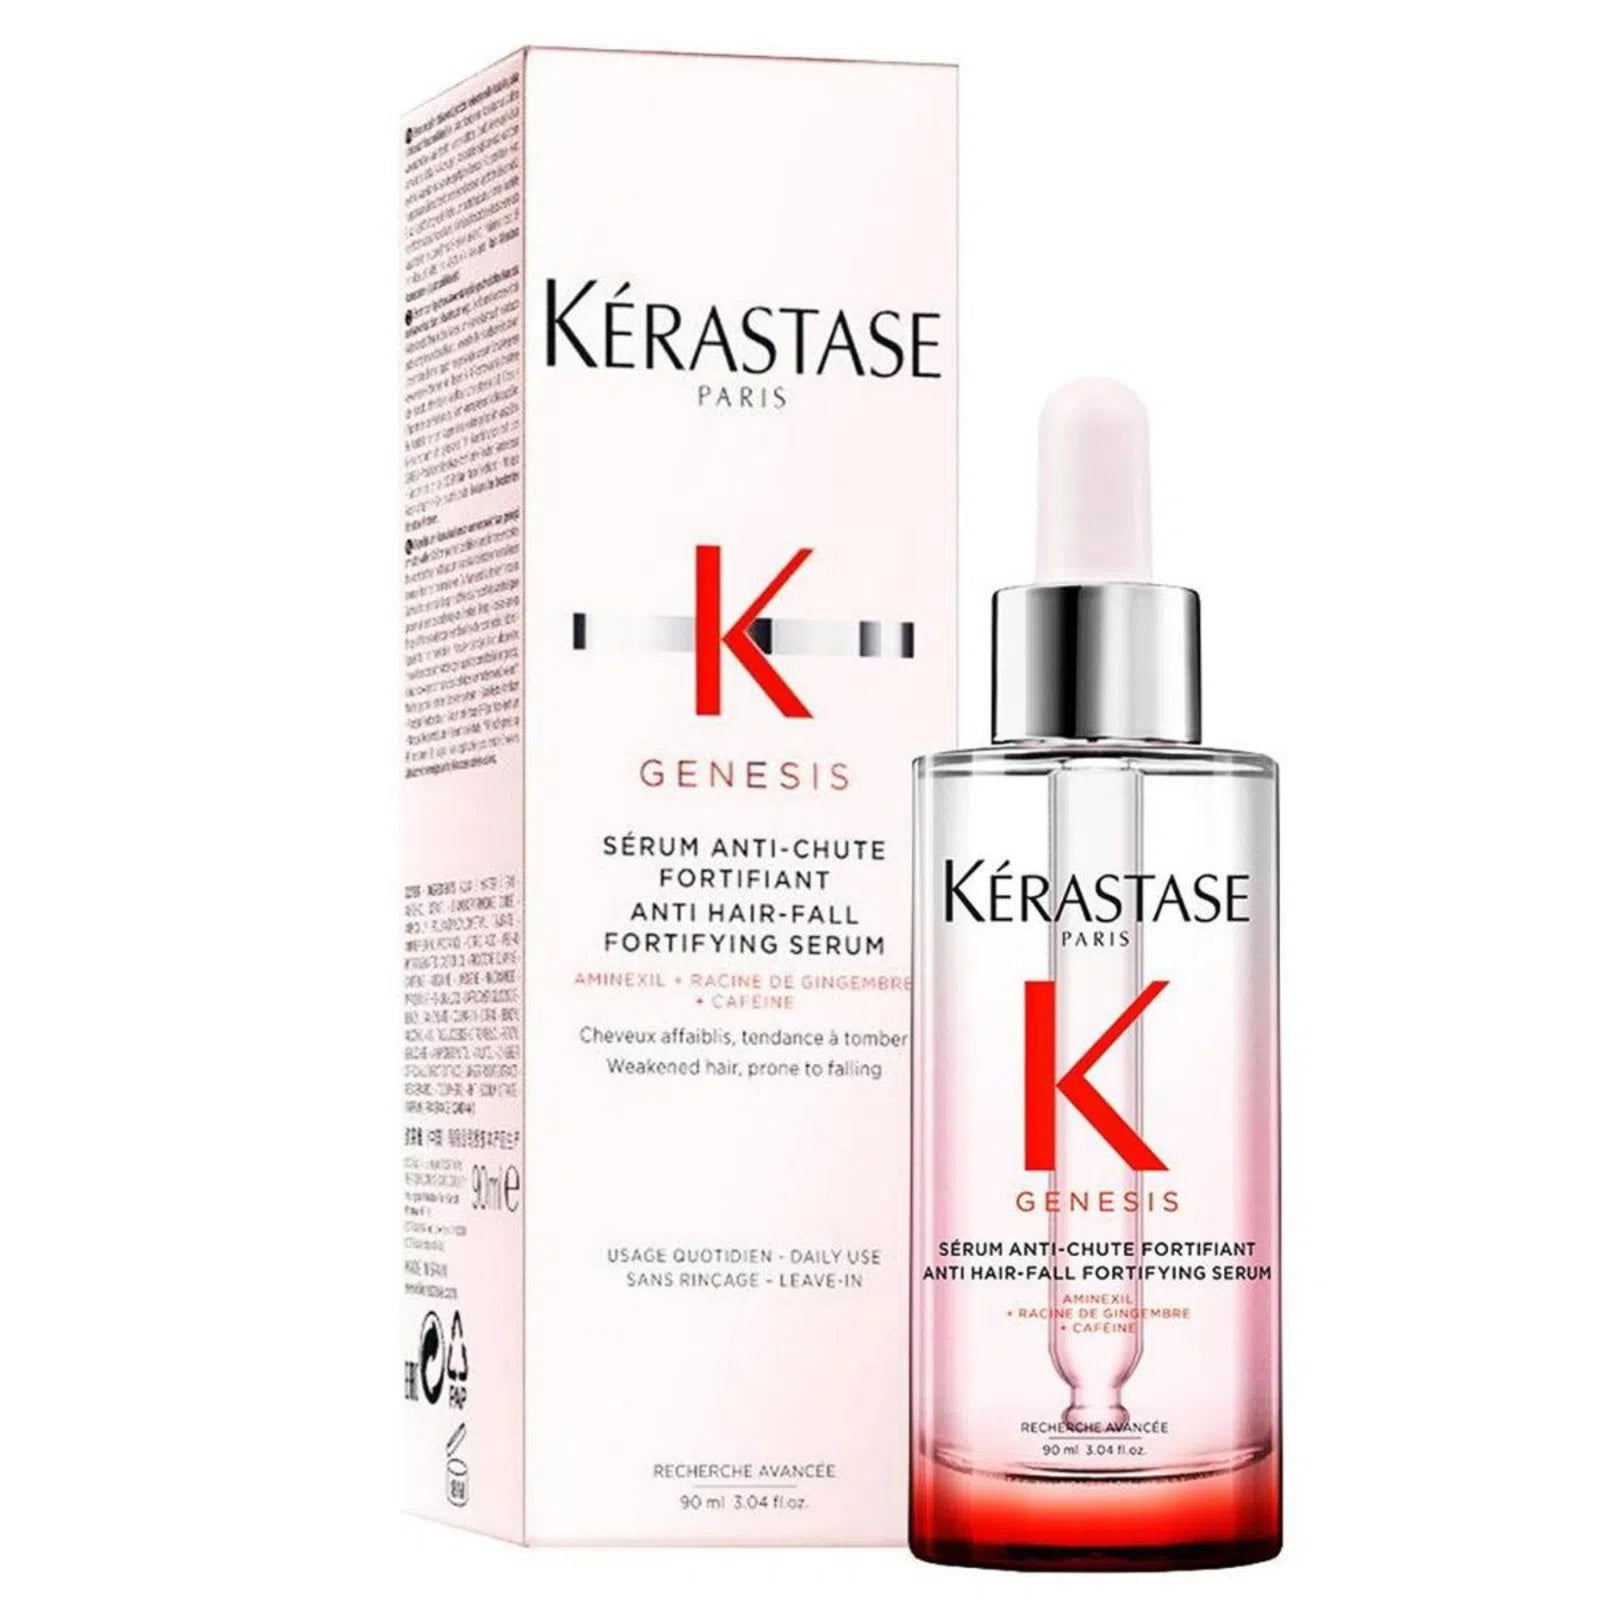 Kerastase Genesis Anti Hair-Fall Fortifying Serum 90ml Ocare Health&Beauty